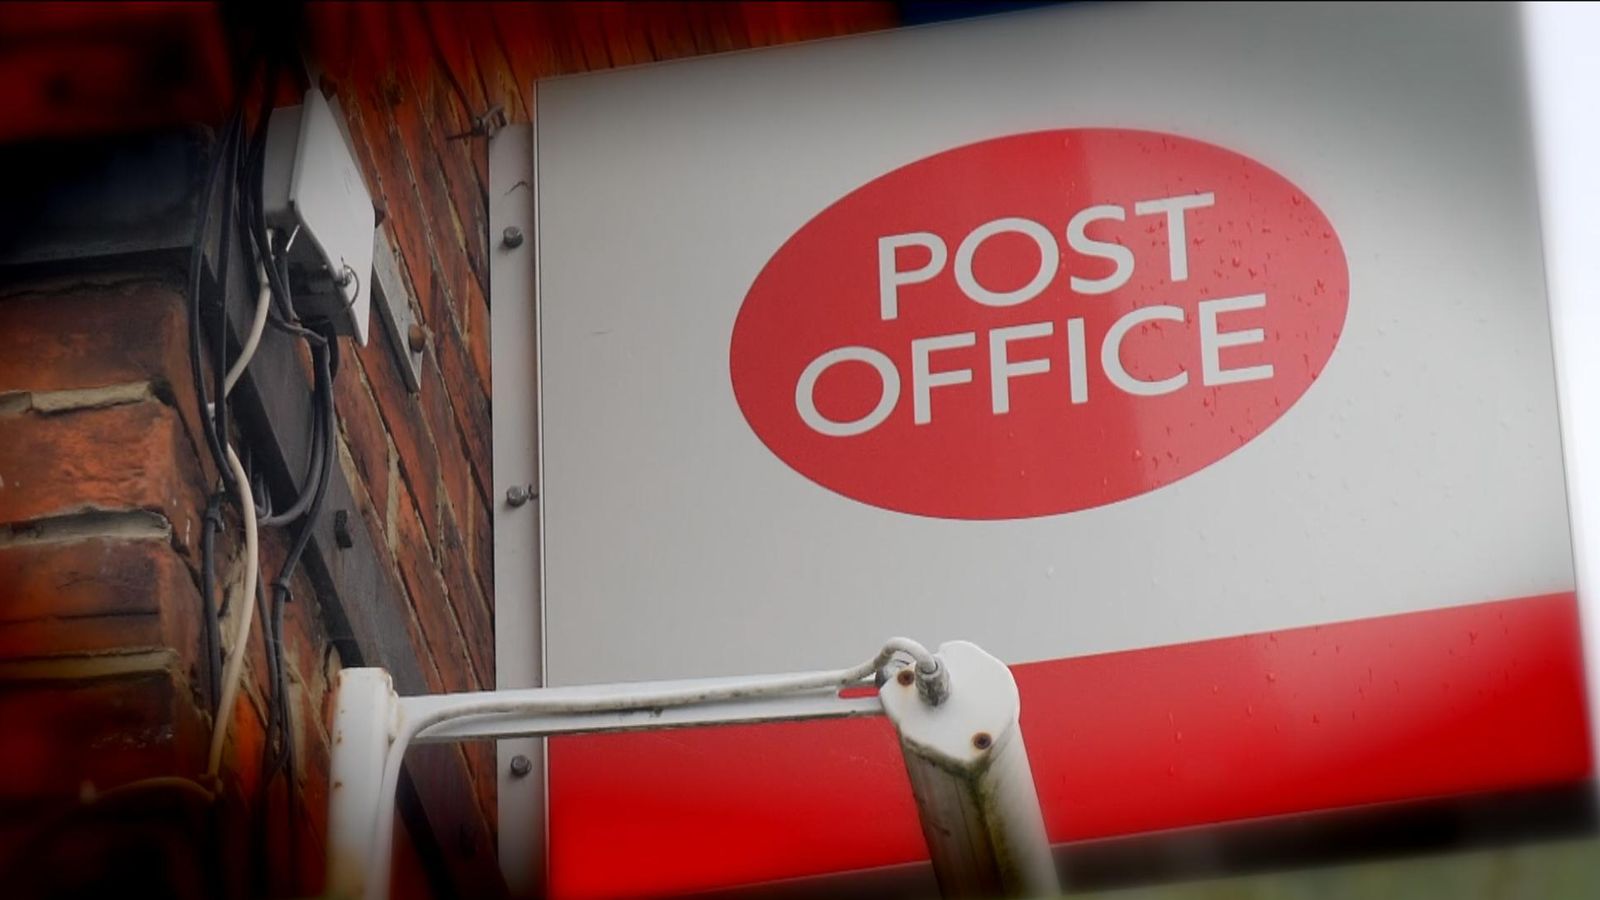 Post Office Horizon IT scandal: 80 detectives across UK set to investigate